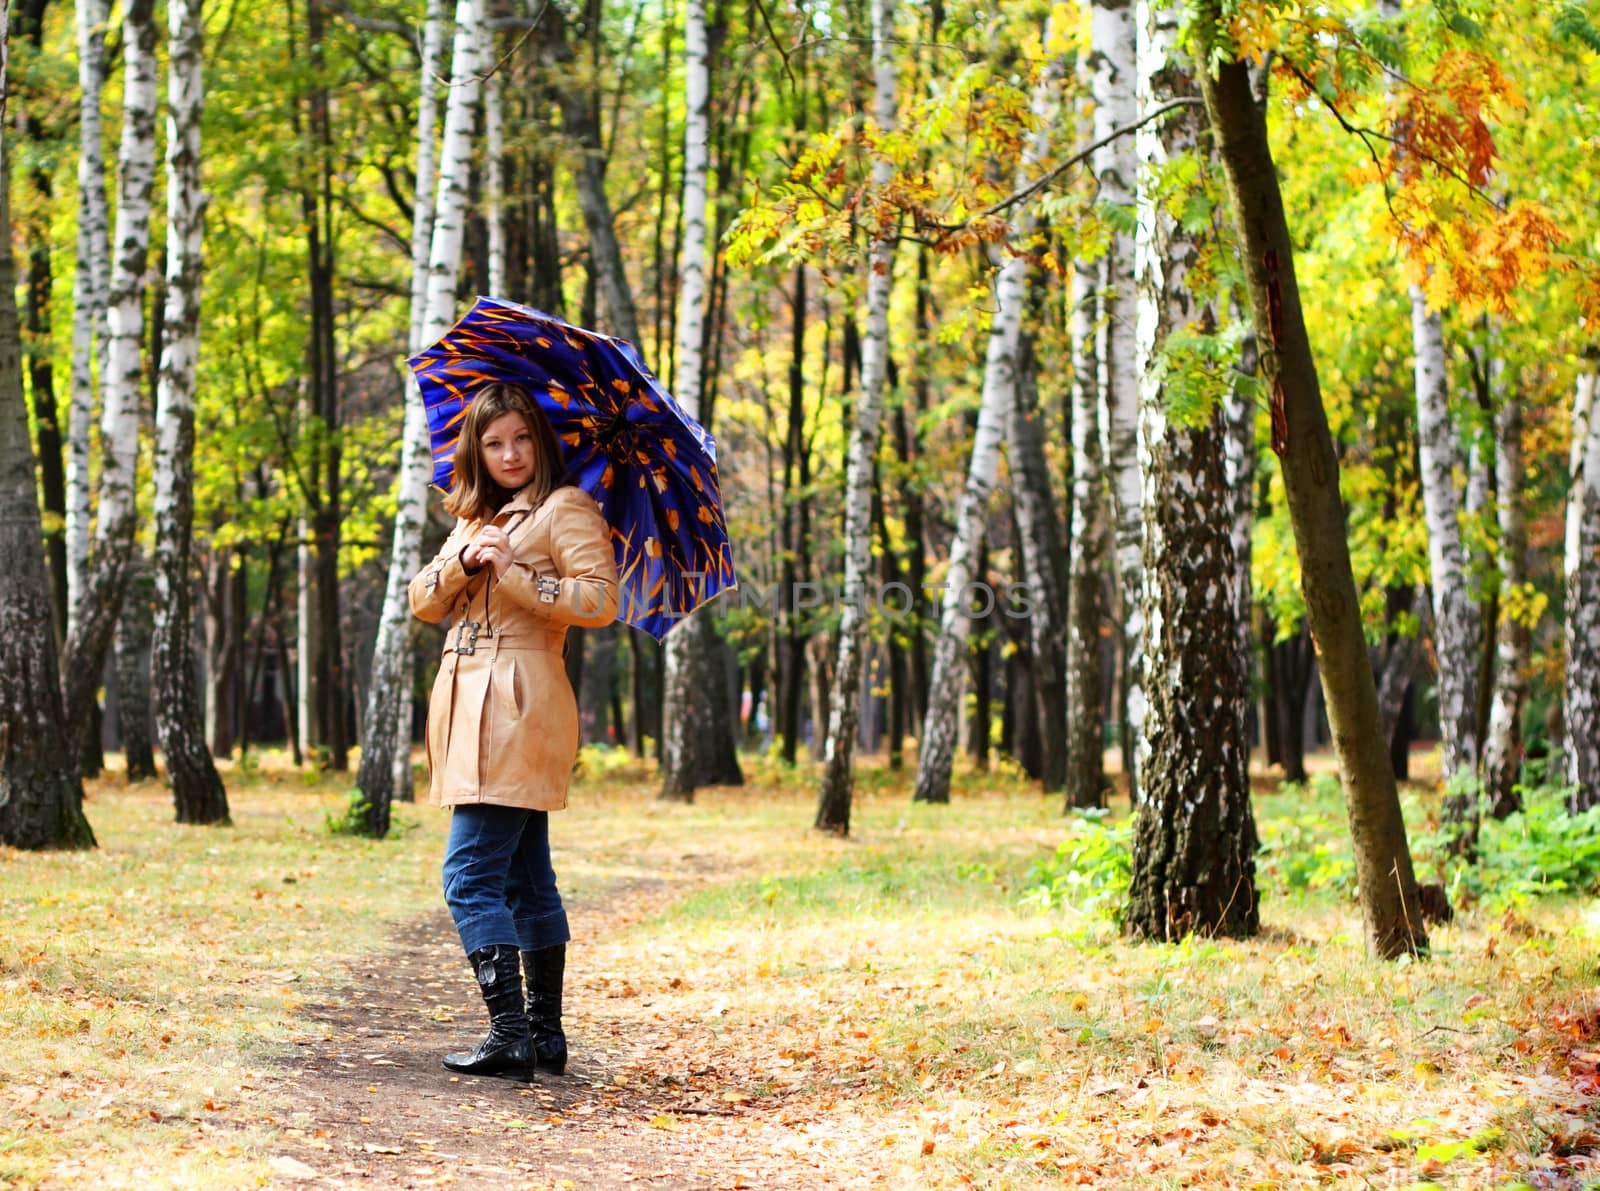 Young women under umbrella in a birch park